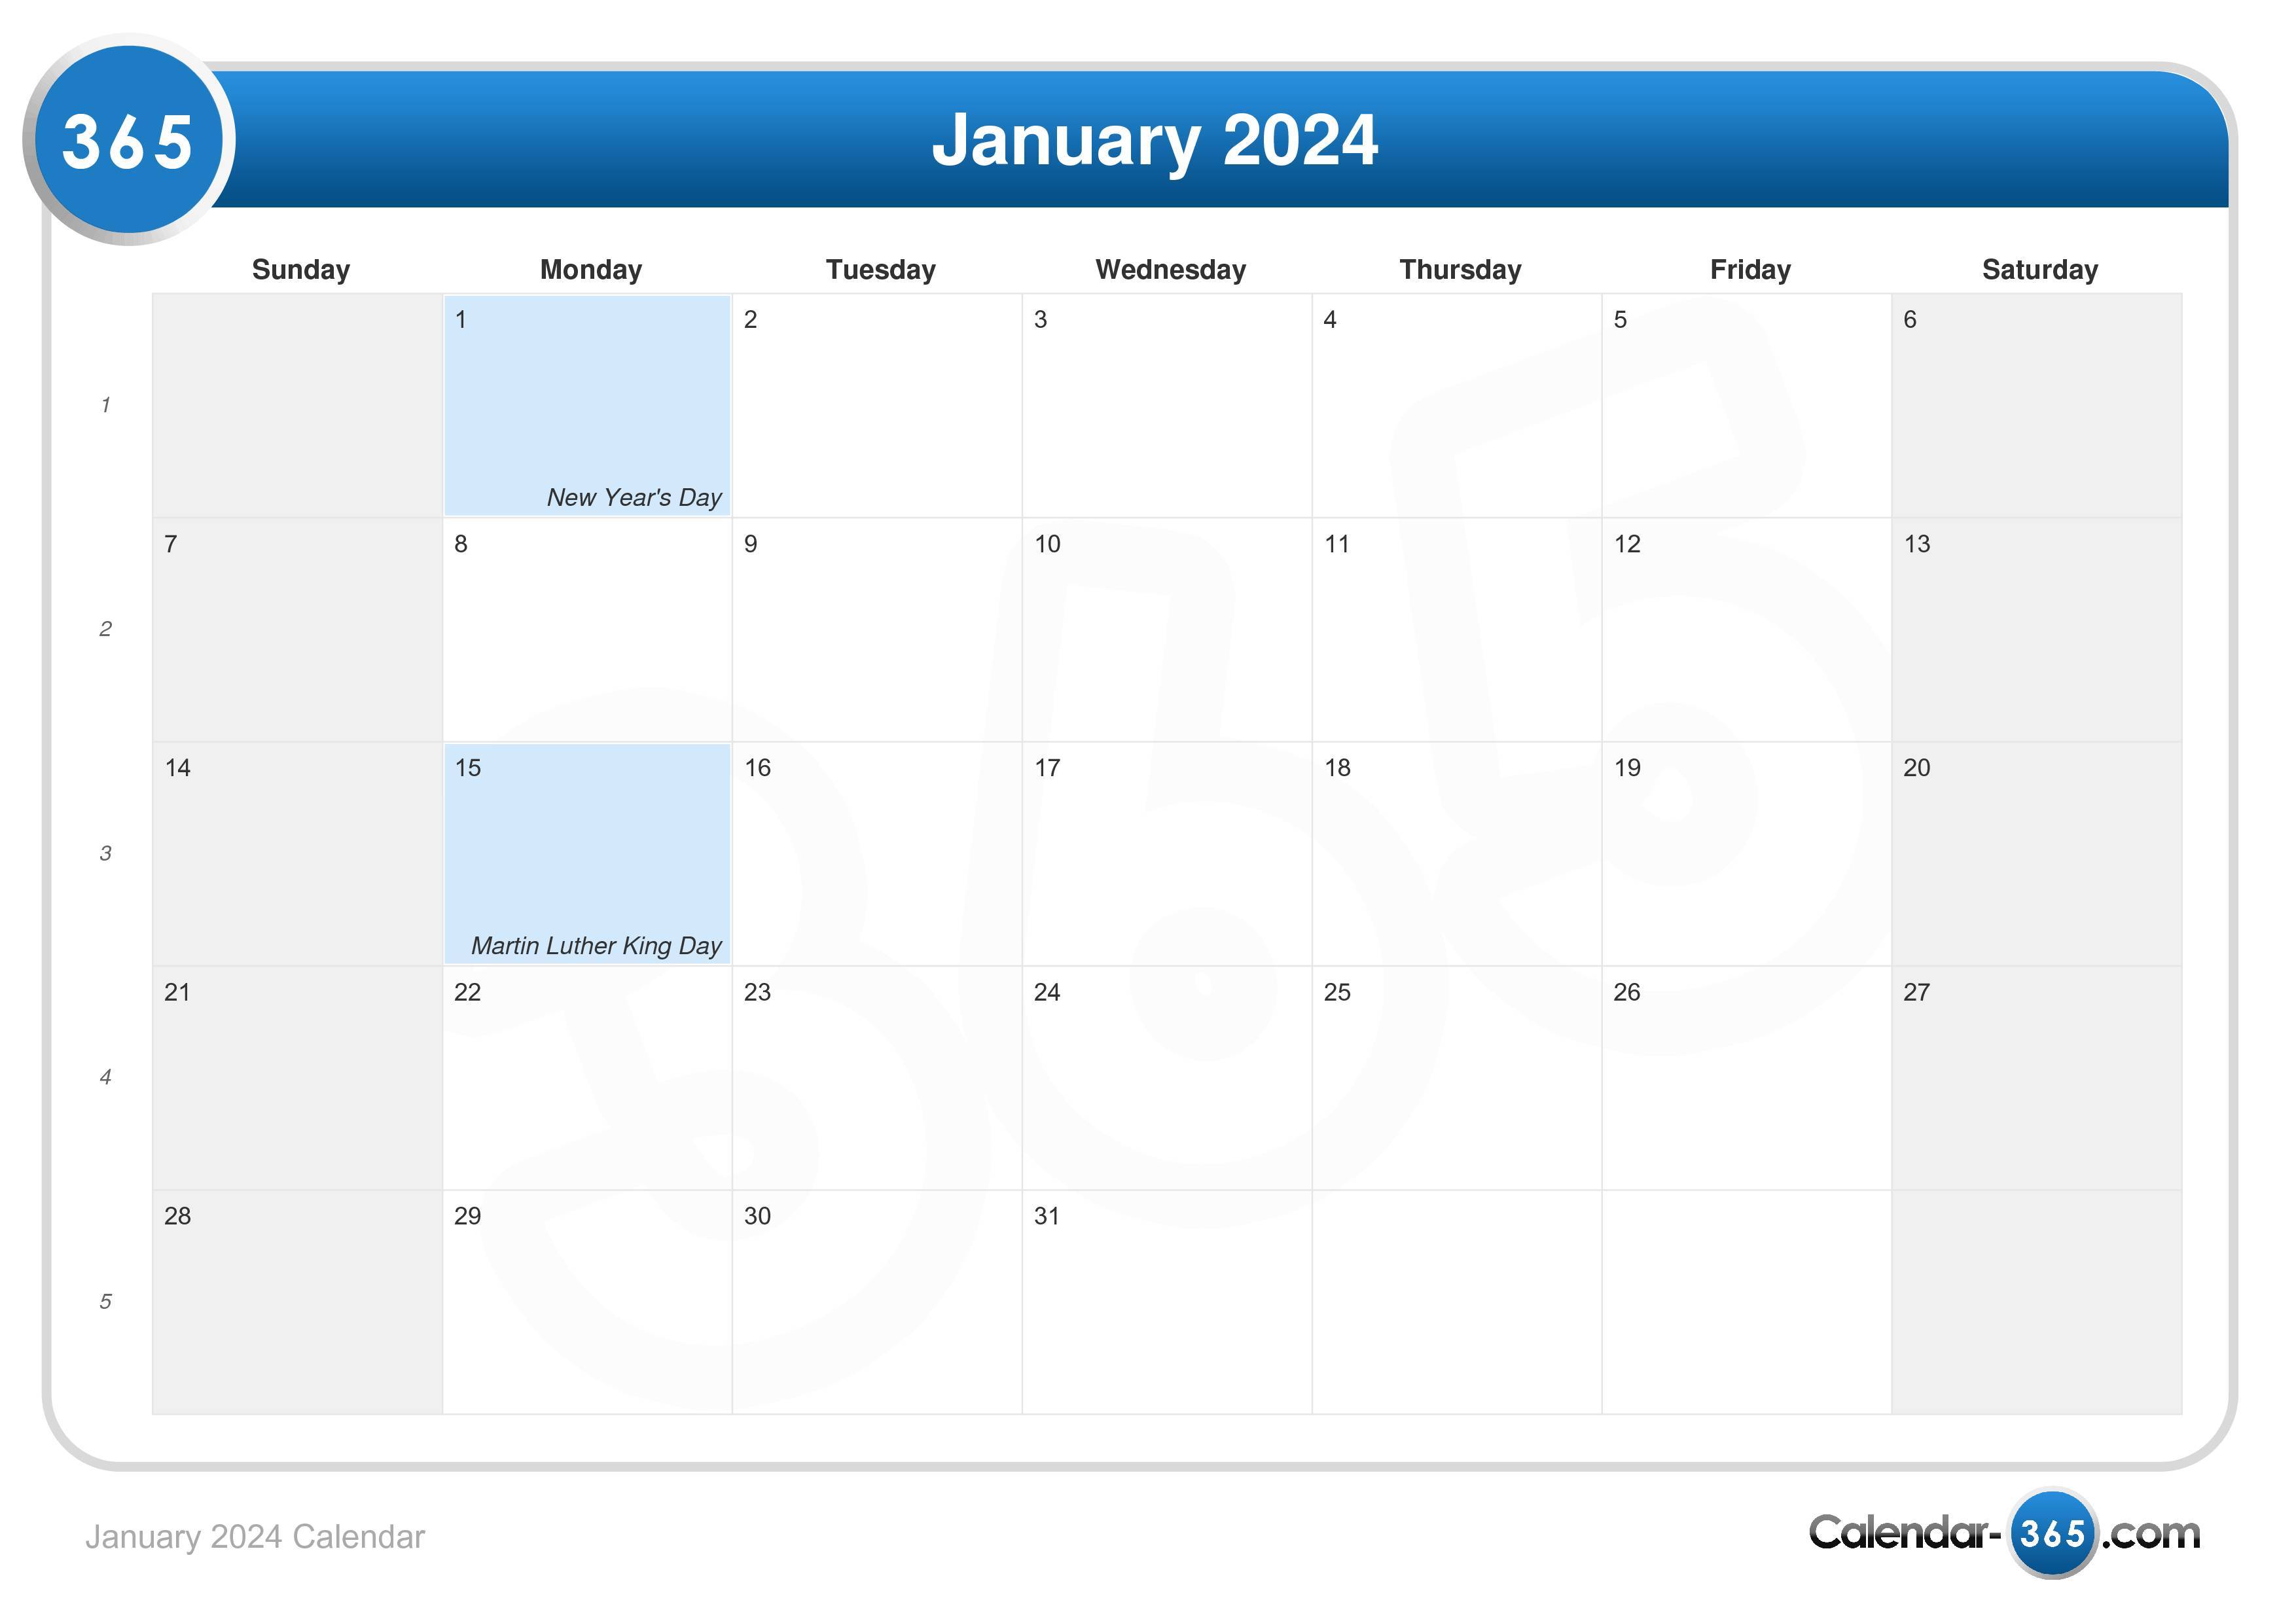 January 2024 Myanmar Calendar Best Awasome List of - January 2024